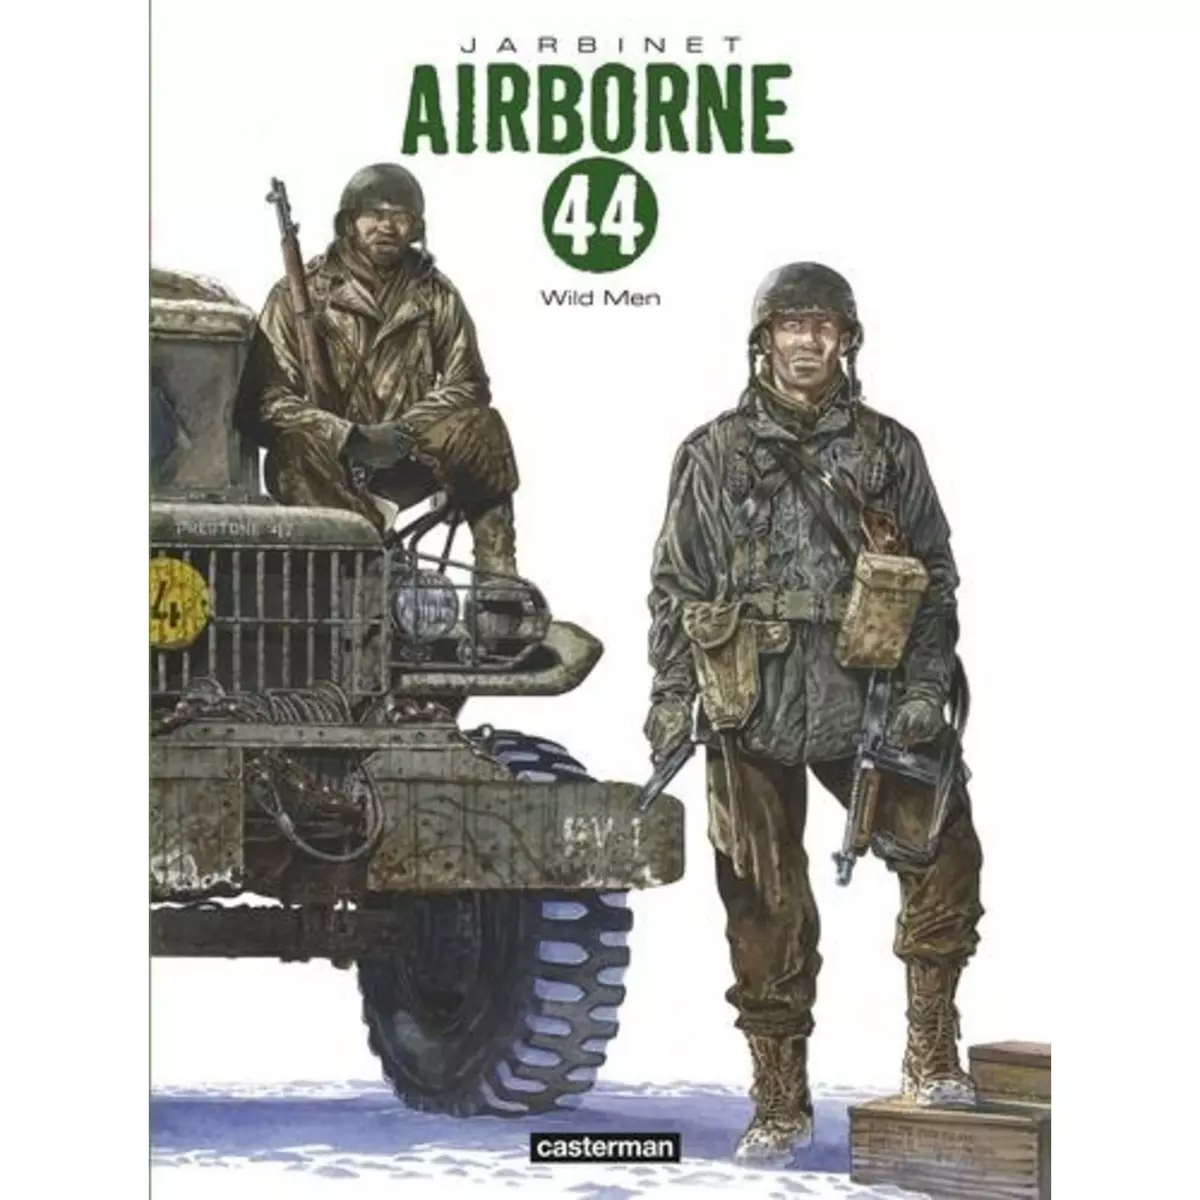  AIRBORNE 44 TOME 10 : WILD MEN, Jarbinet Philippe